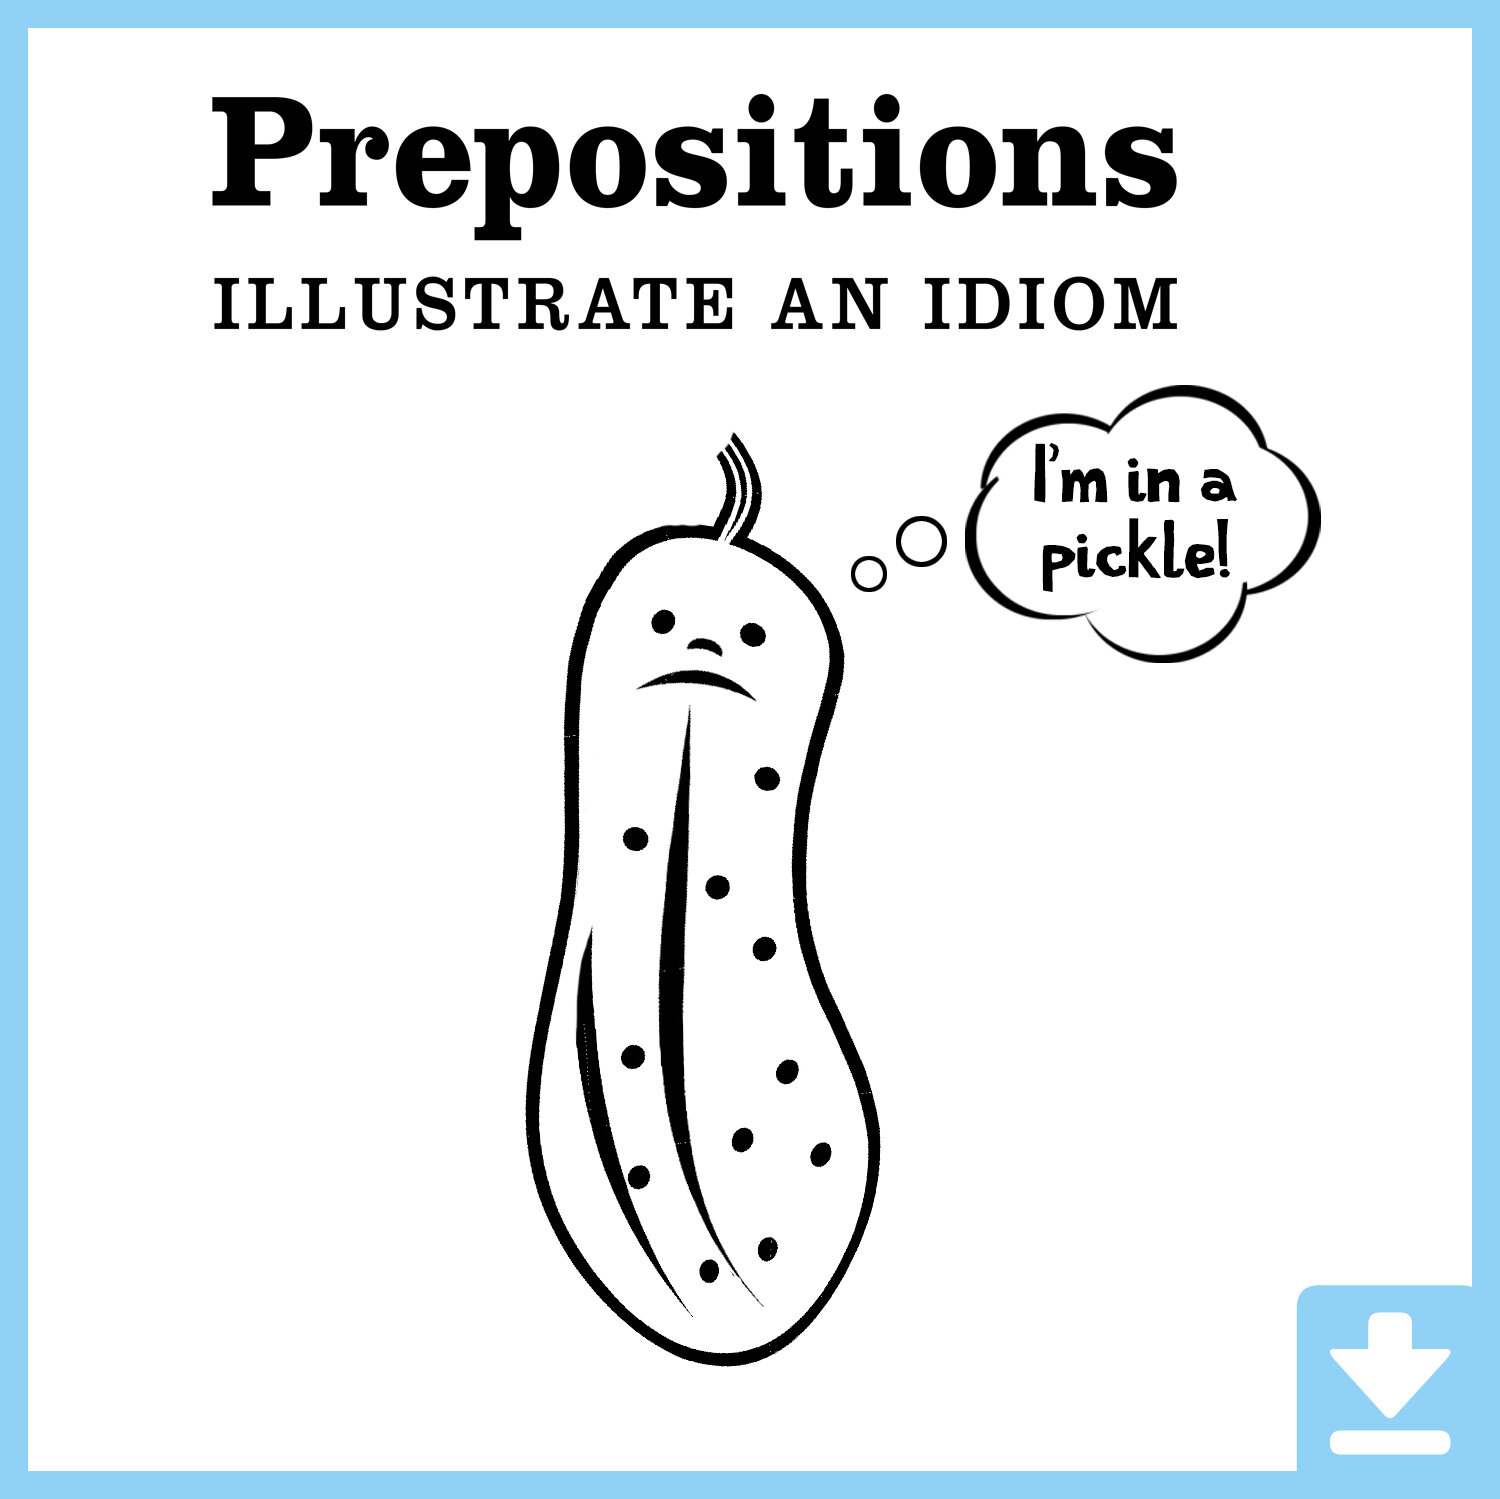 Prepositions-illustrate-an-idiom.jpg